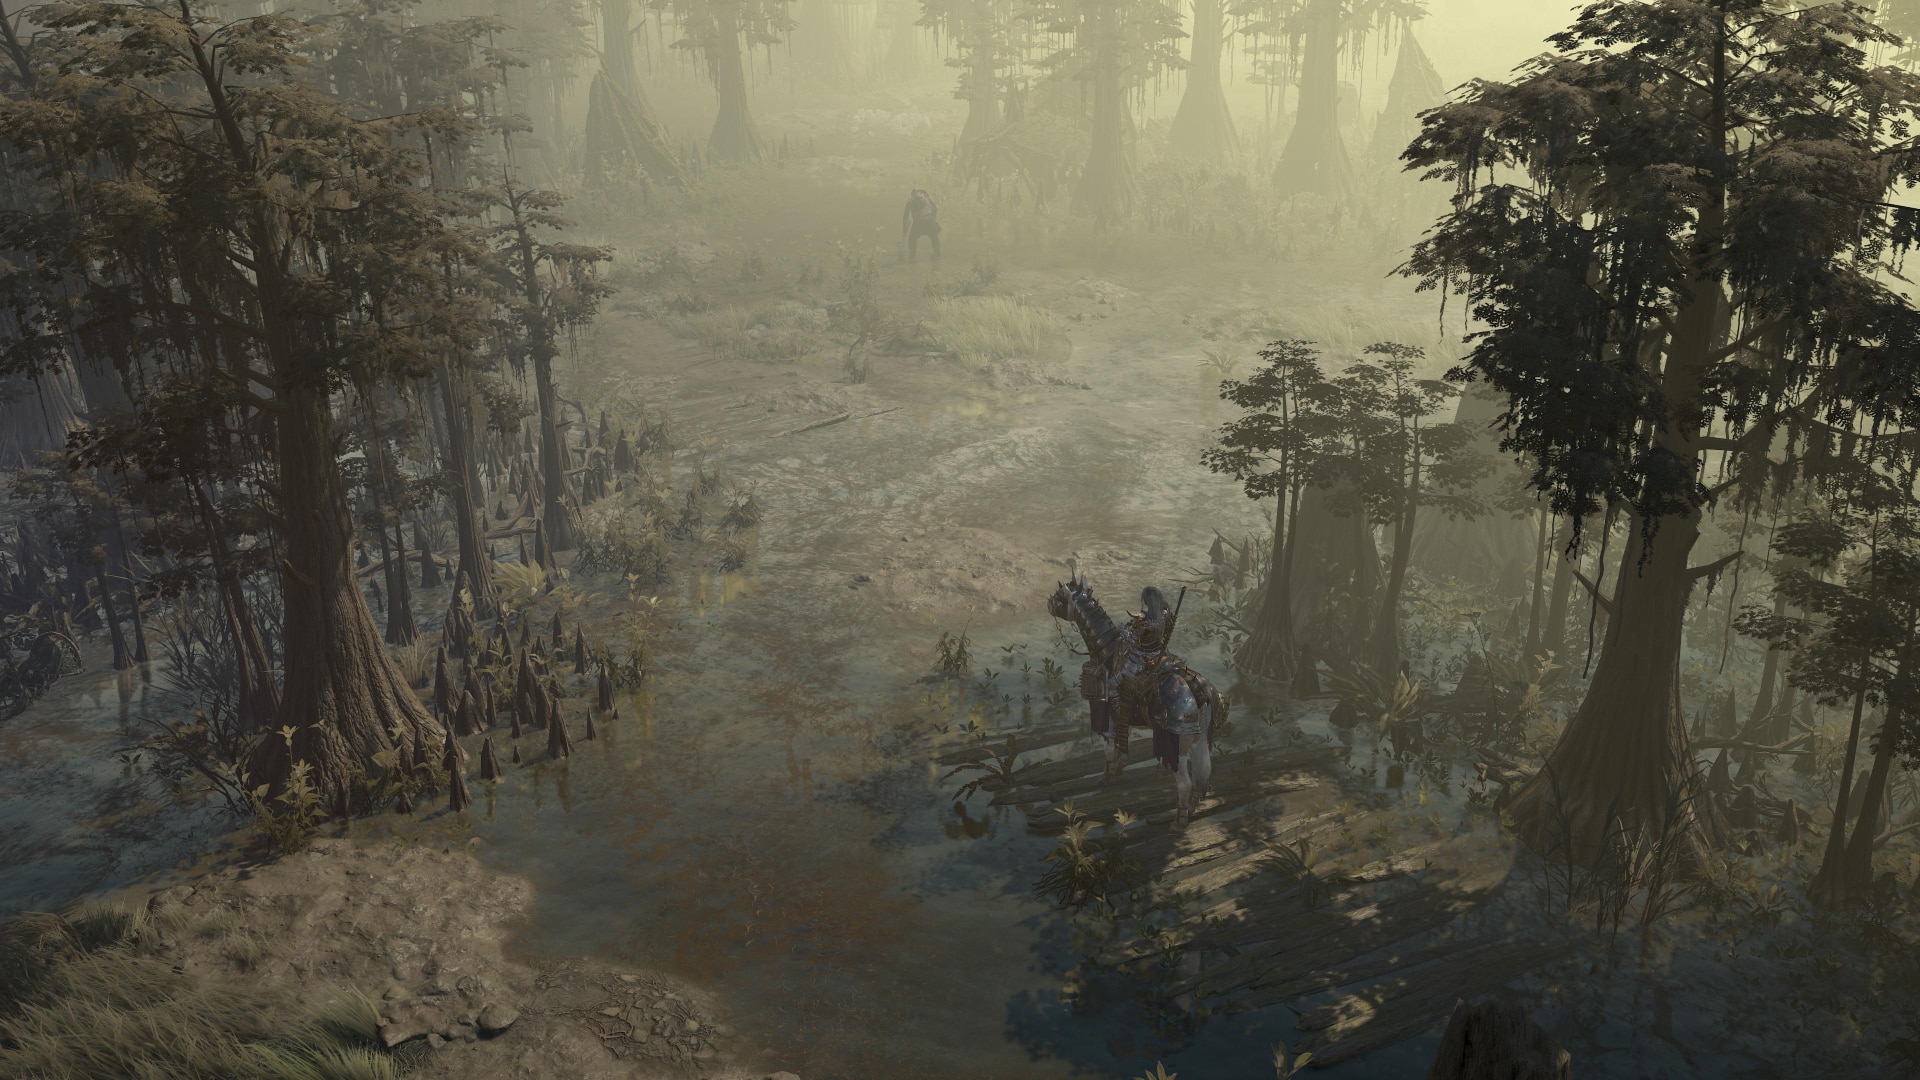 Screenshot of a Horse Mount From Diablo IV or Diablo 4